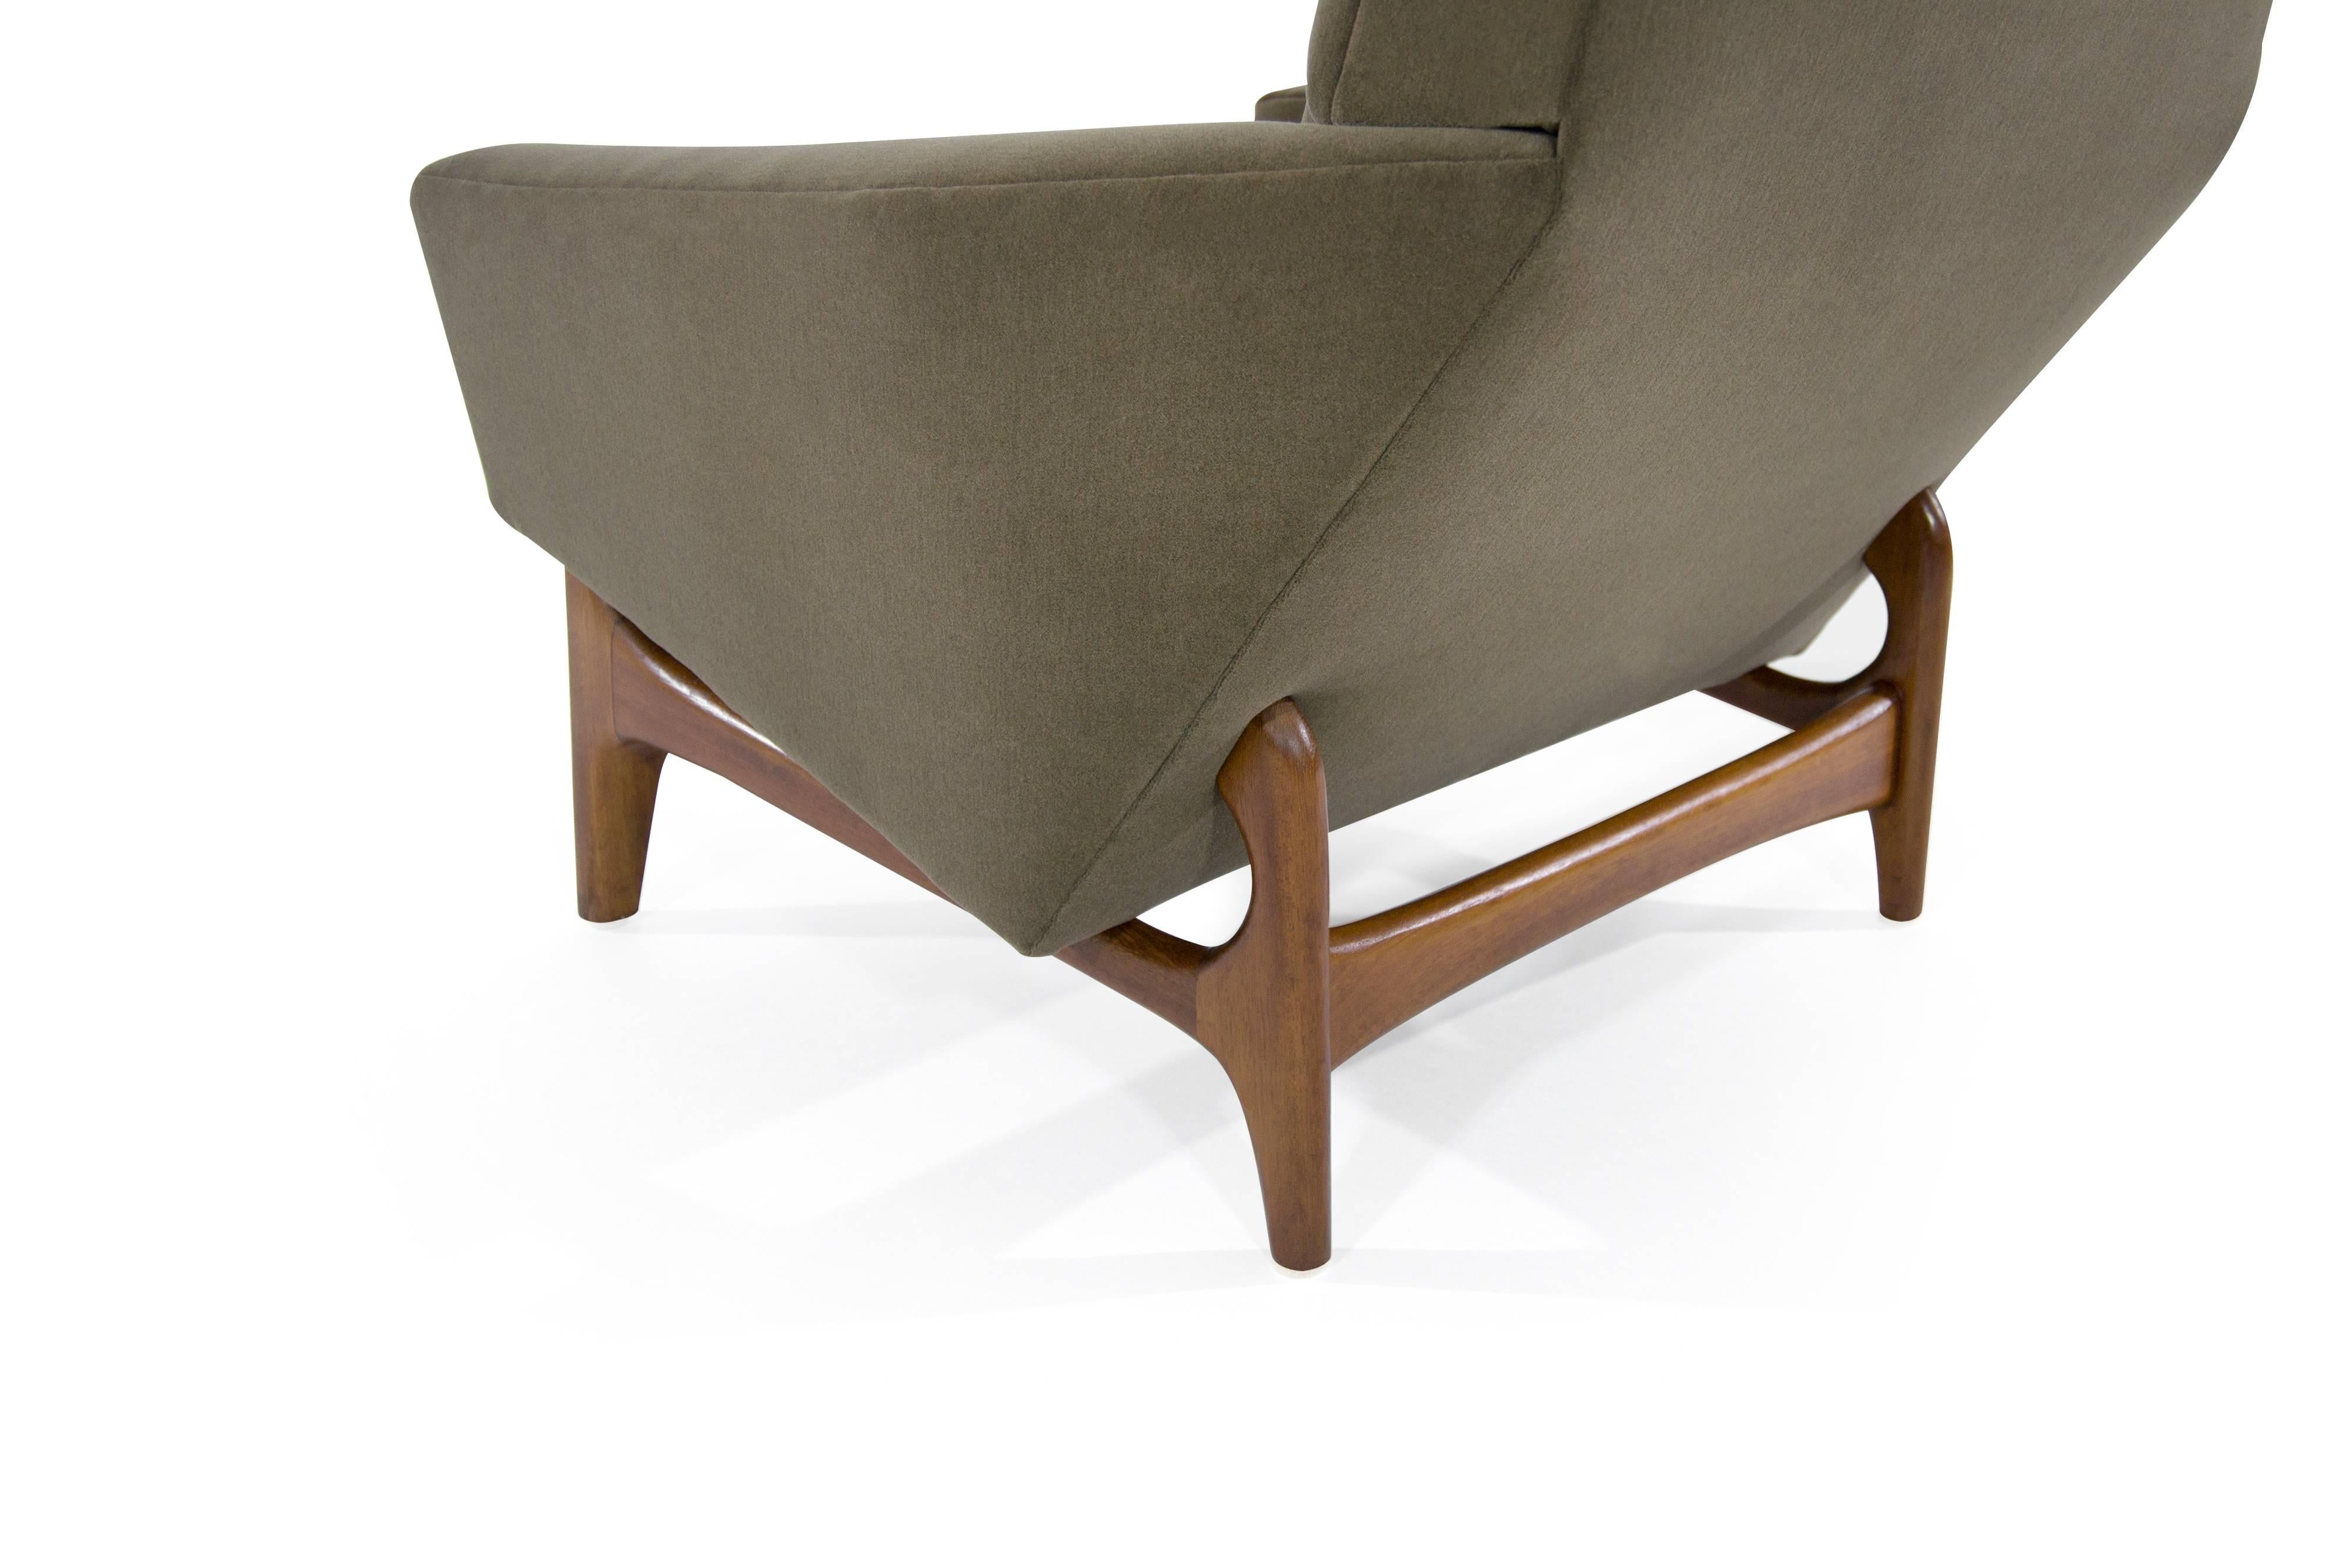 20th Century Scandinavian Modern Lounge Chairs on Sculptural Teak Bases